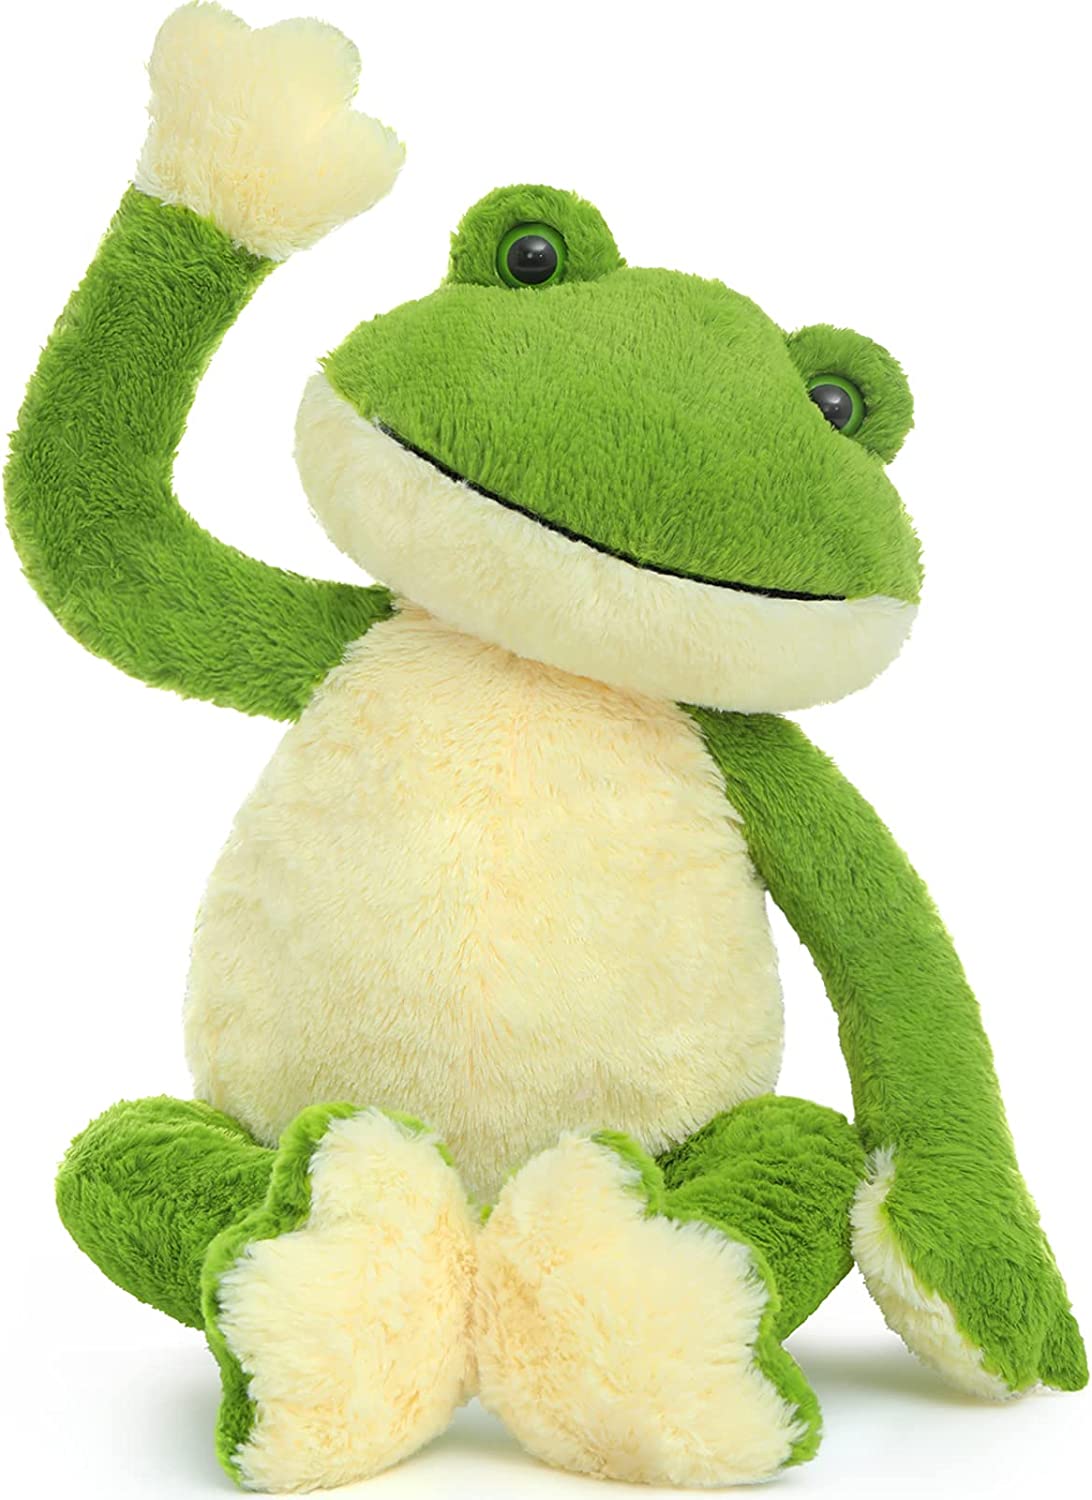 Frog Stuffed Animal, Green, 24 Inches